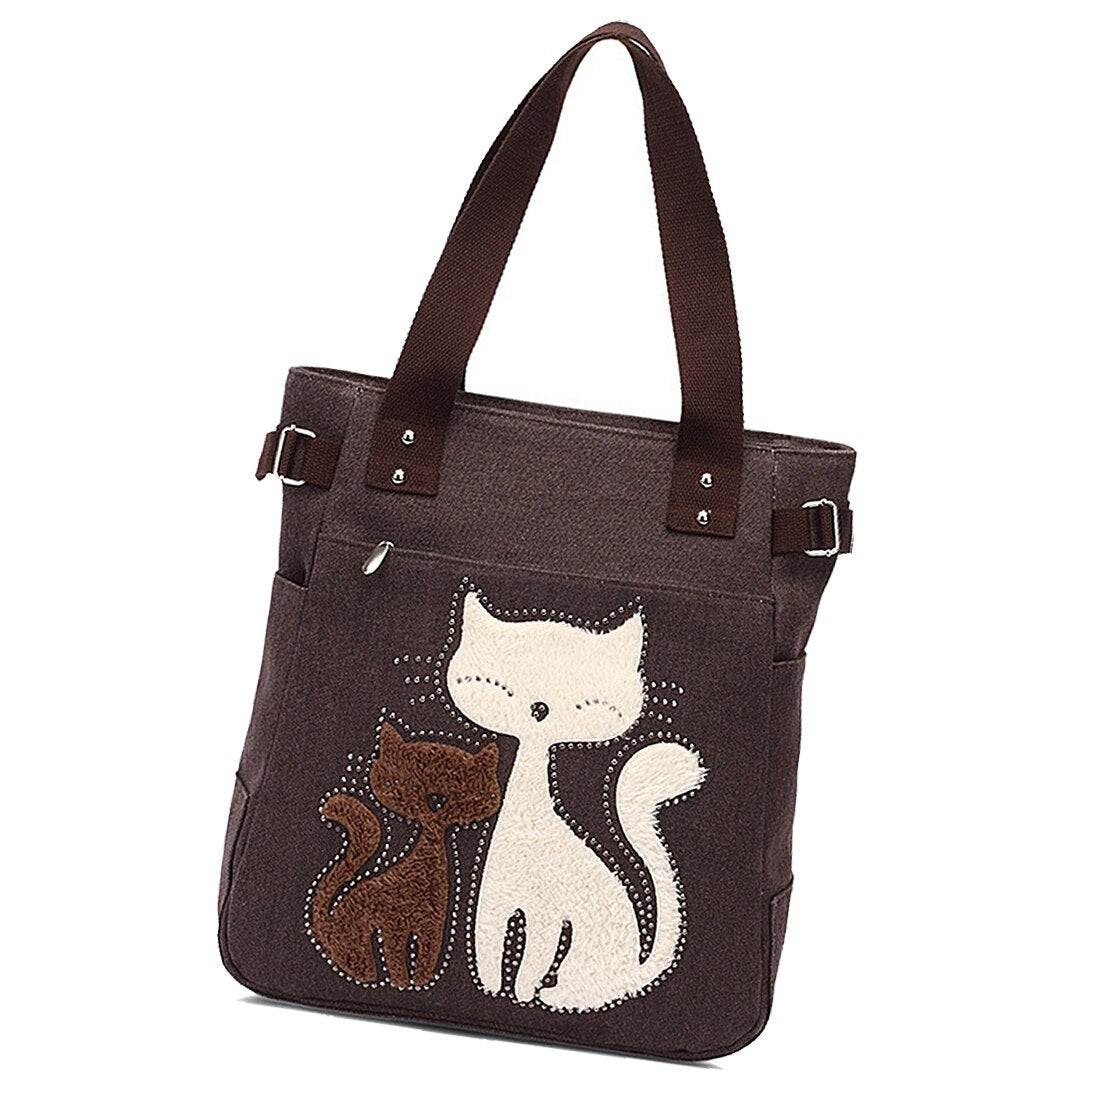 Women's messenger handbag canvas bag with cute cat small shopping shoulder bag Green - ebowsos